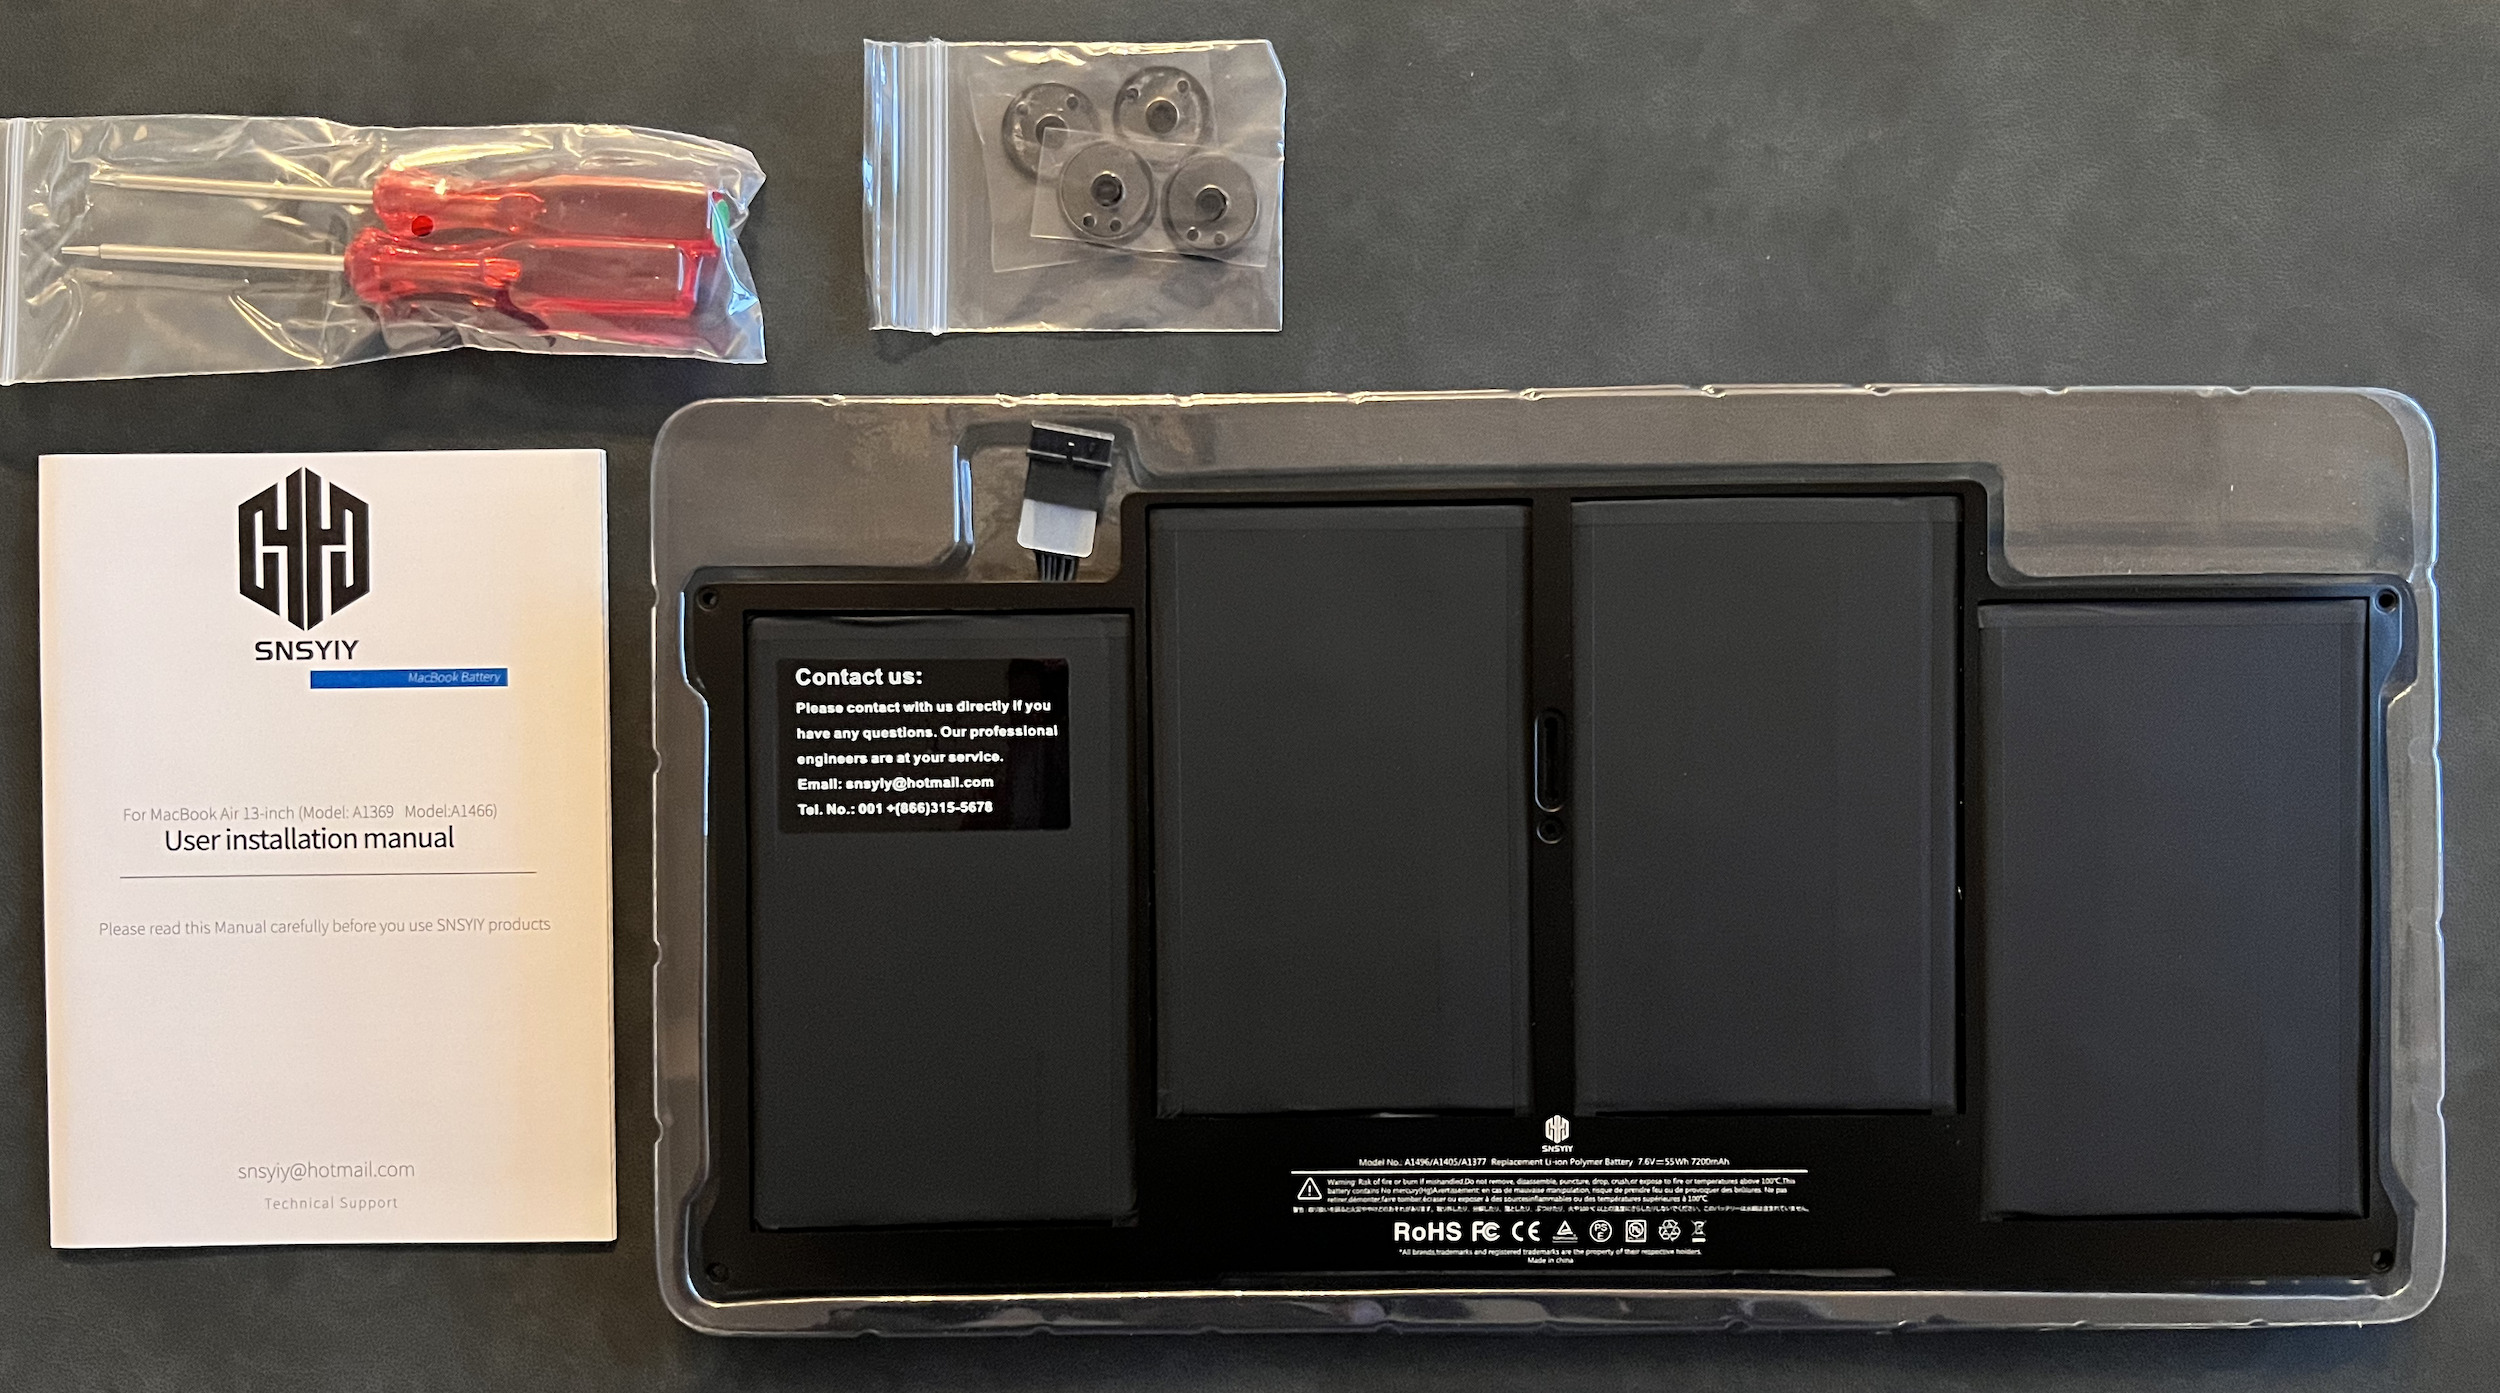 SNSYIYのMacBook Air (13-inch, Mid 2012)用のバッテリーの同梱物